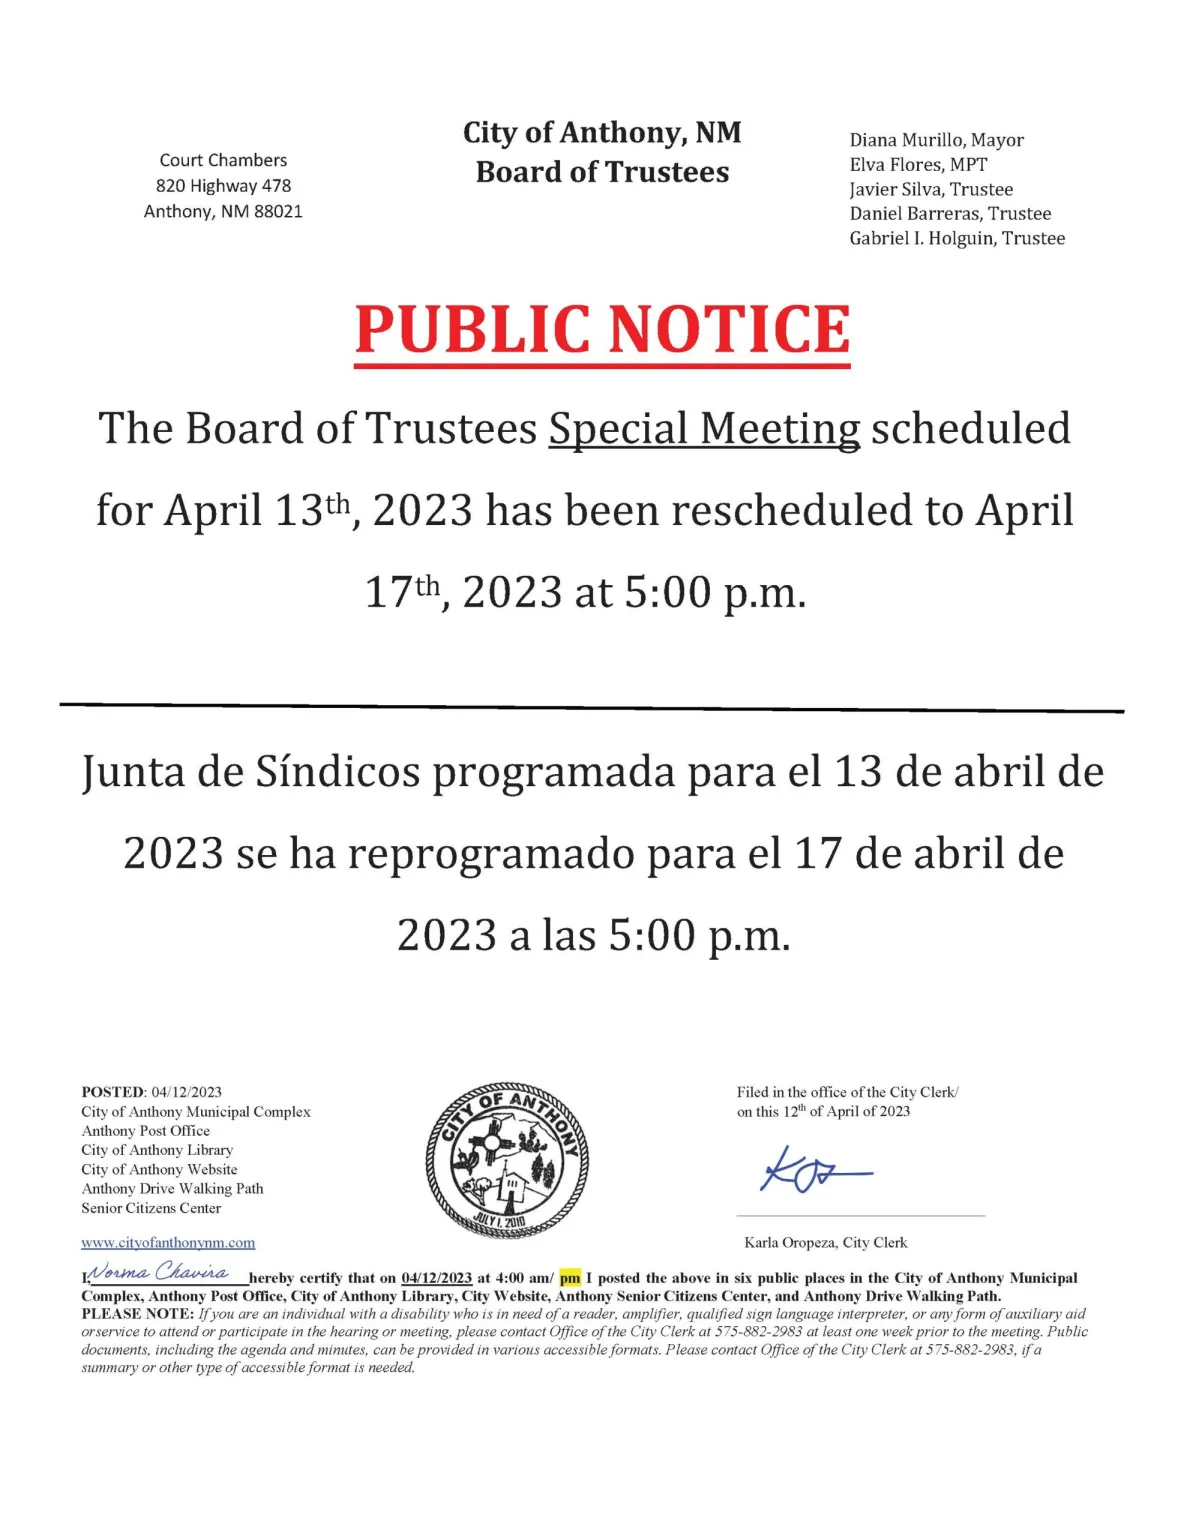 Special BOT Meeting Rescheduled Notice